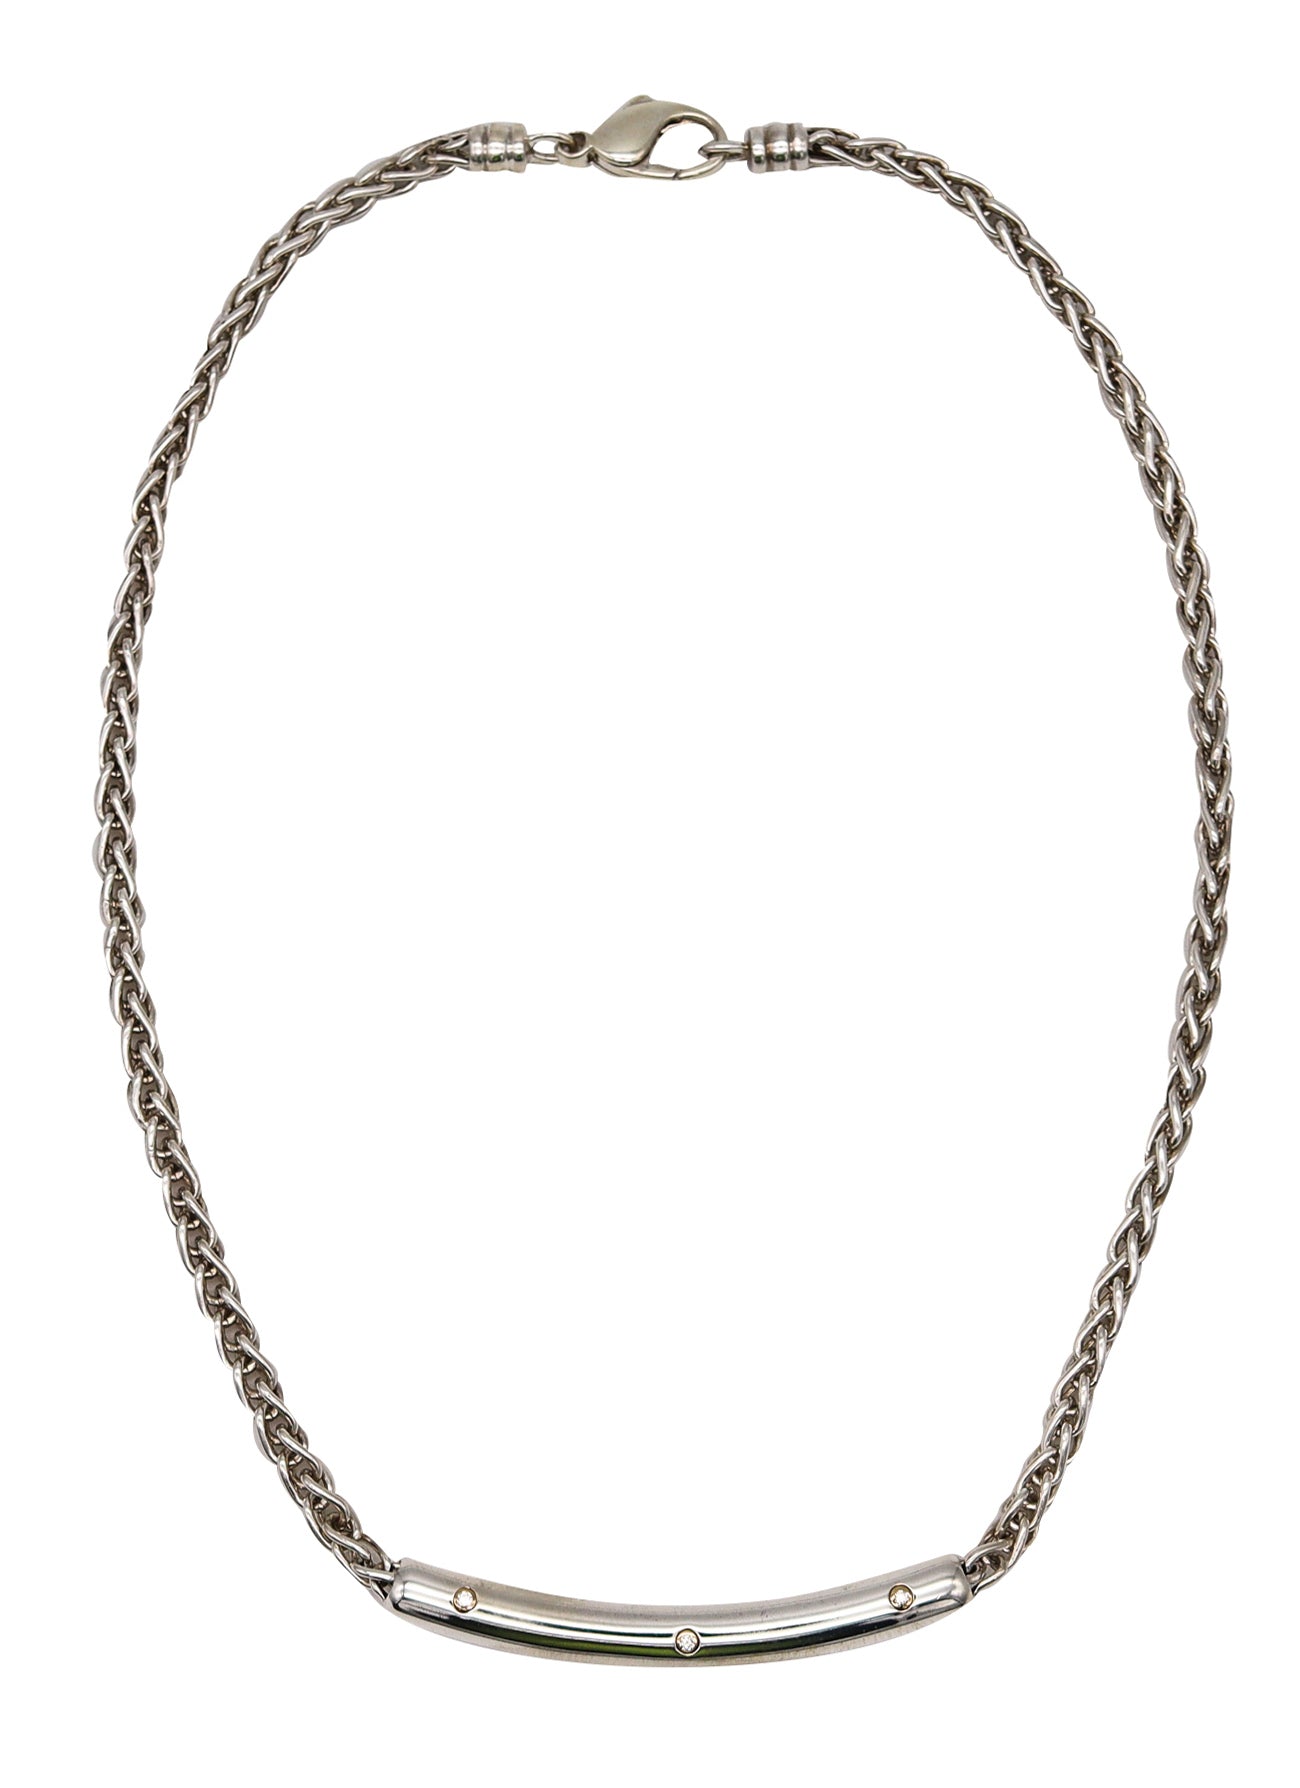 Movado Modernist Tubular Necklace In 18Kt  .925 Sterling Silver With 3 VS Diamonds